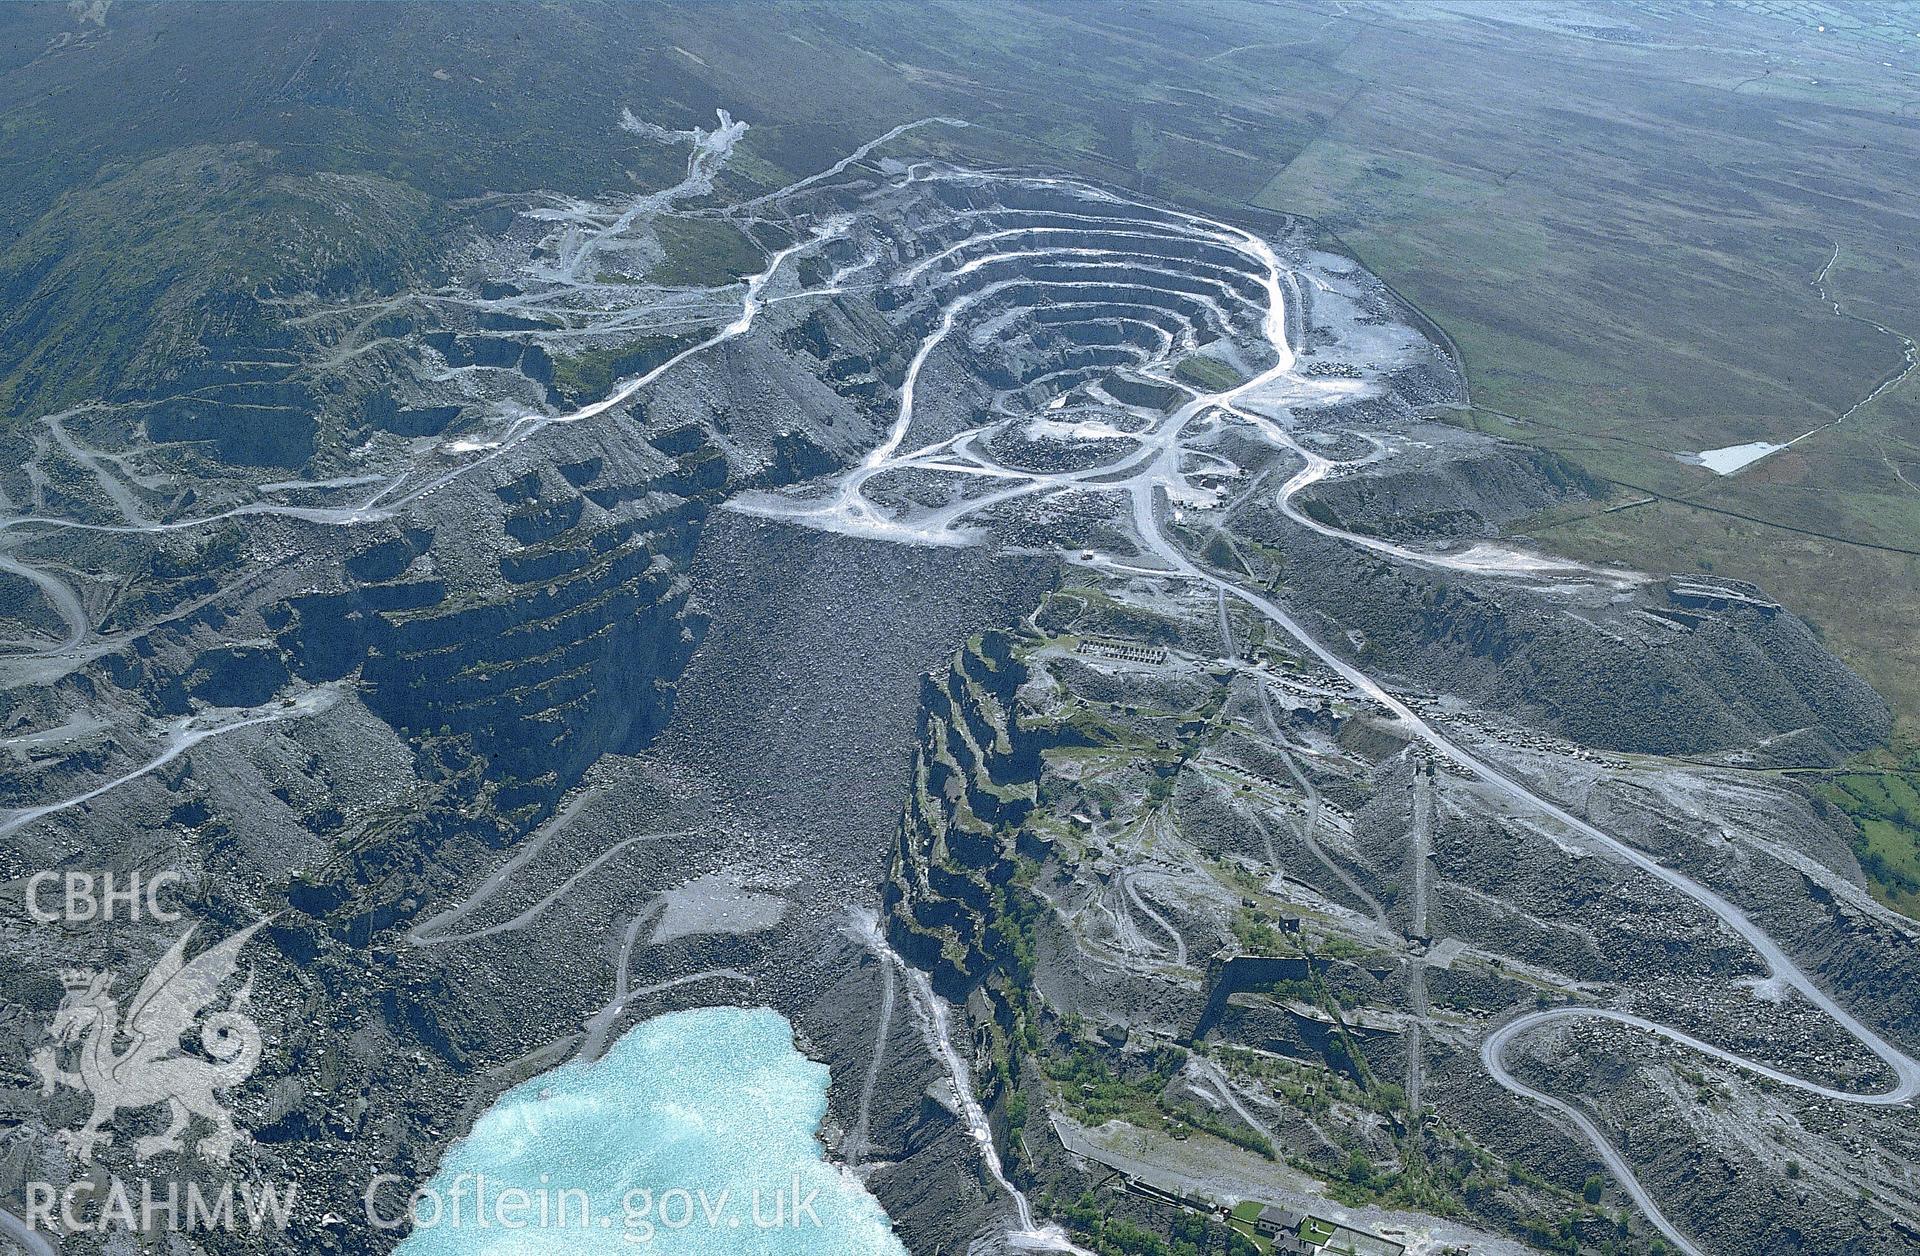 RCAHMW colour slide oblique aerial photograph of Penrhyn Slate Quarry, Llandygai, taken by C.R. Musson, 02/05/94